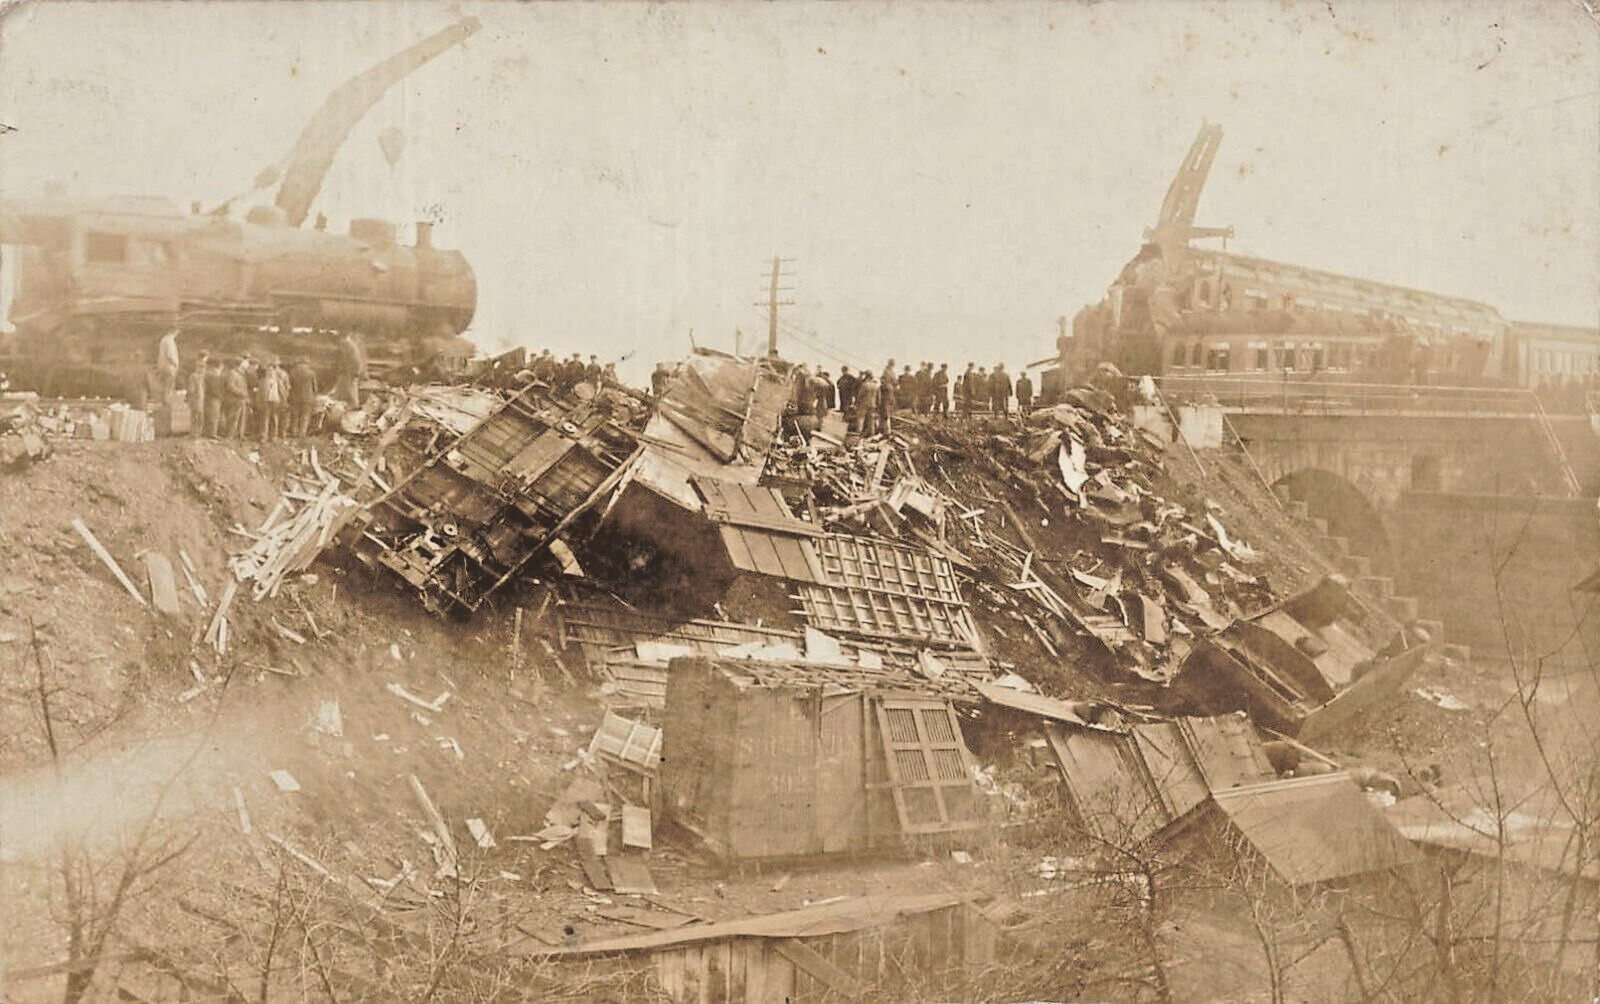 Train Wreck February 1917 Mount Union Pennsylvania-19 Killed~REAL PHOTO POSTCARD